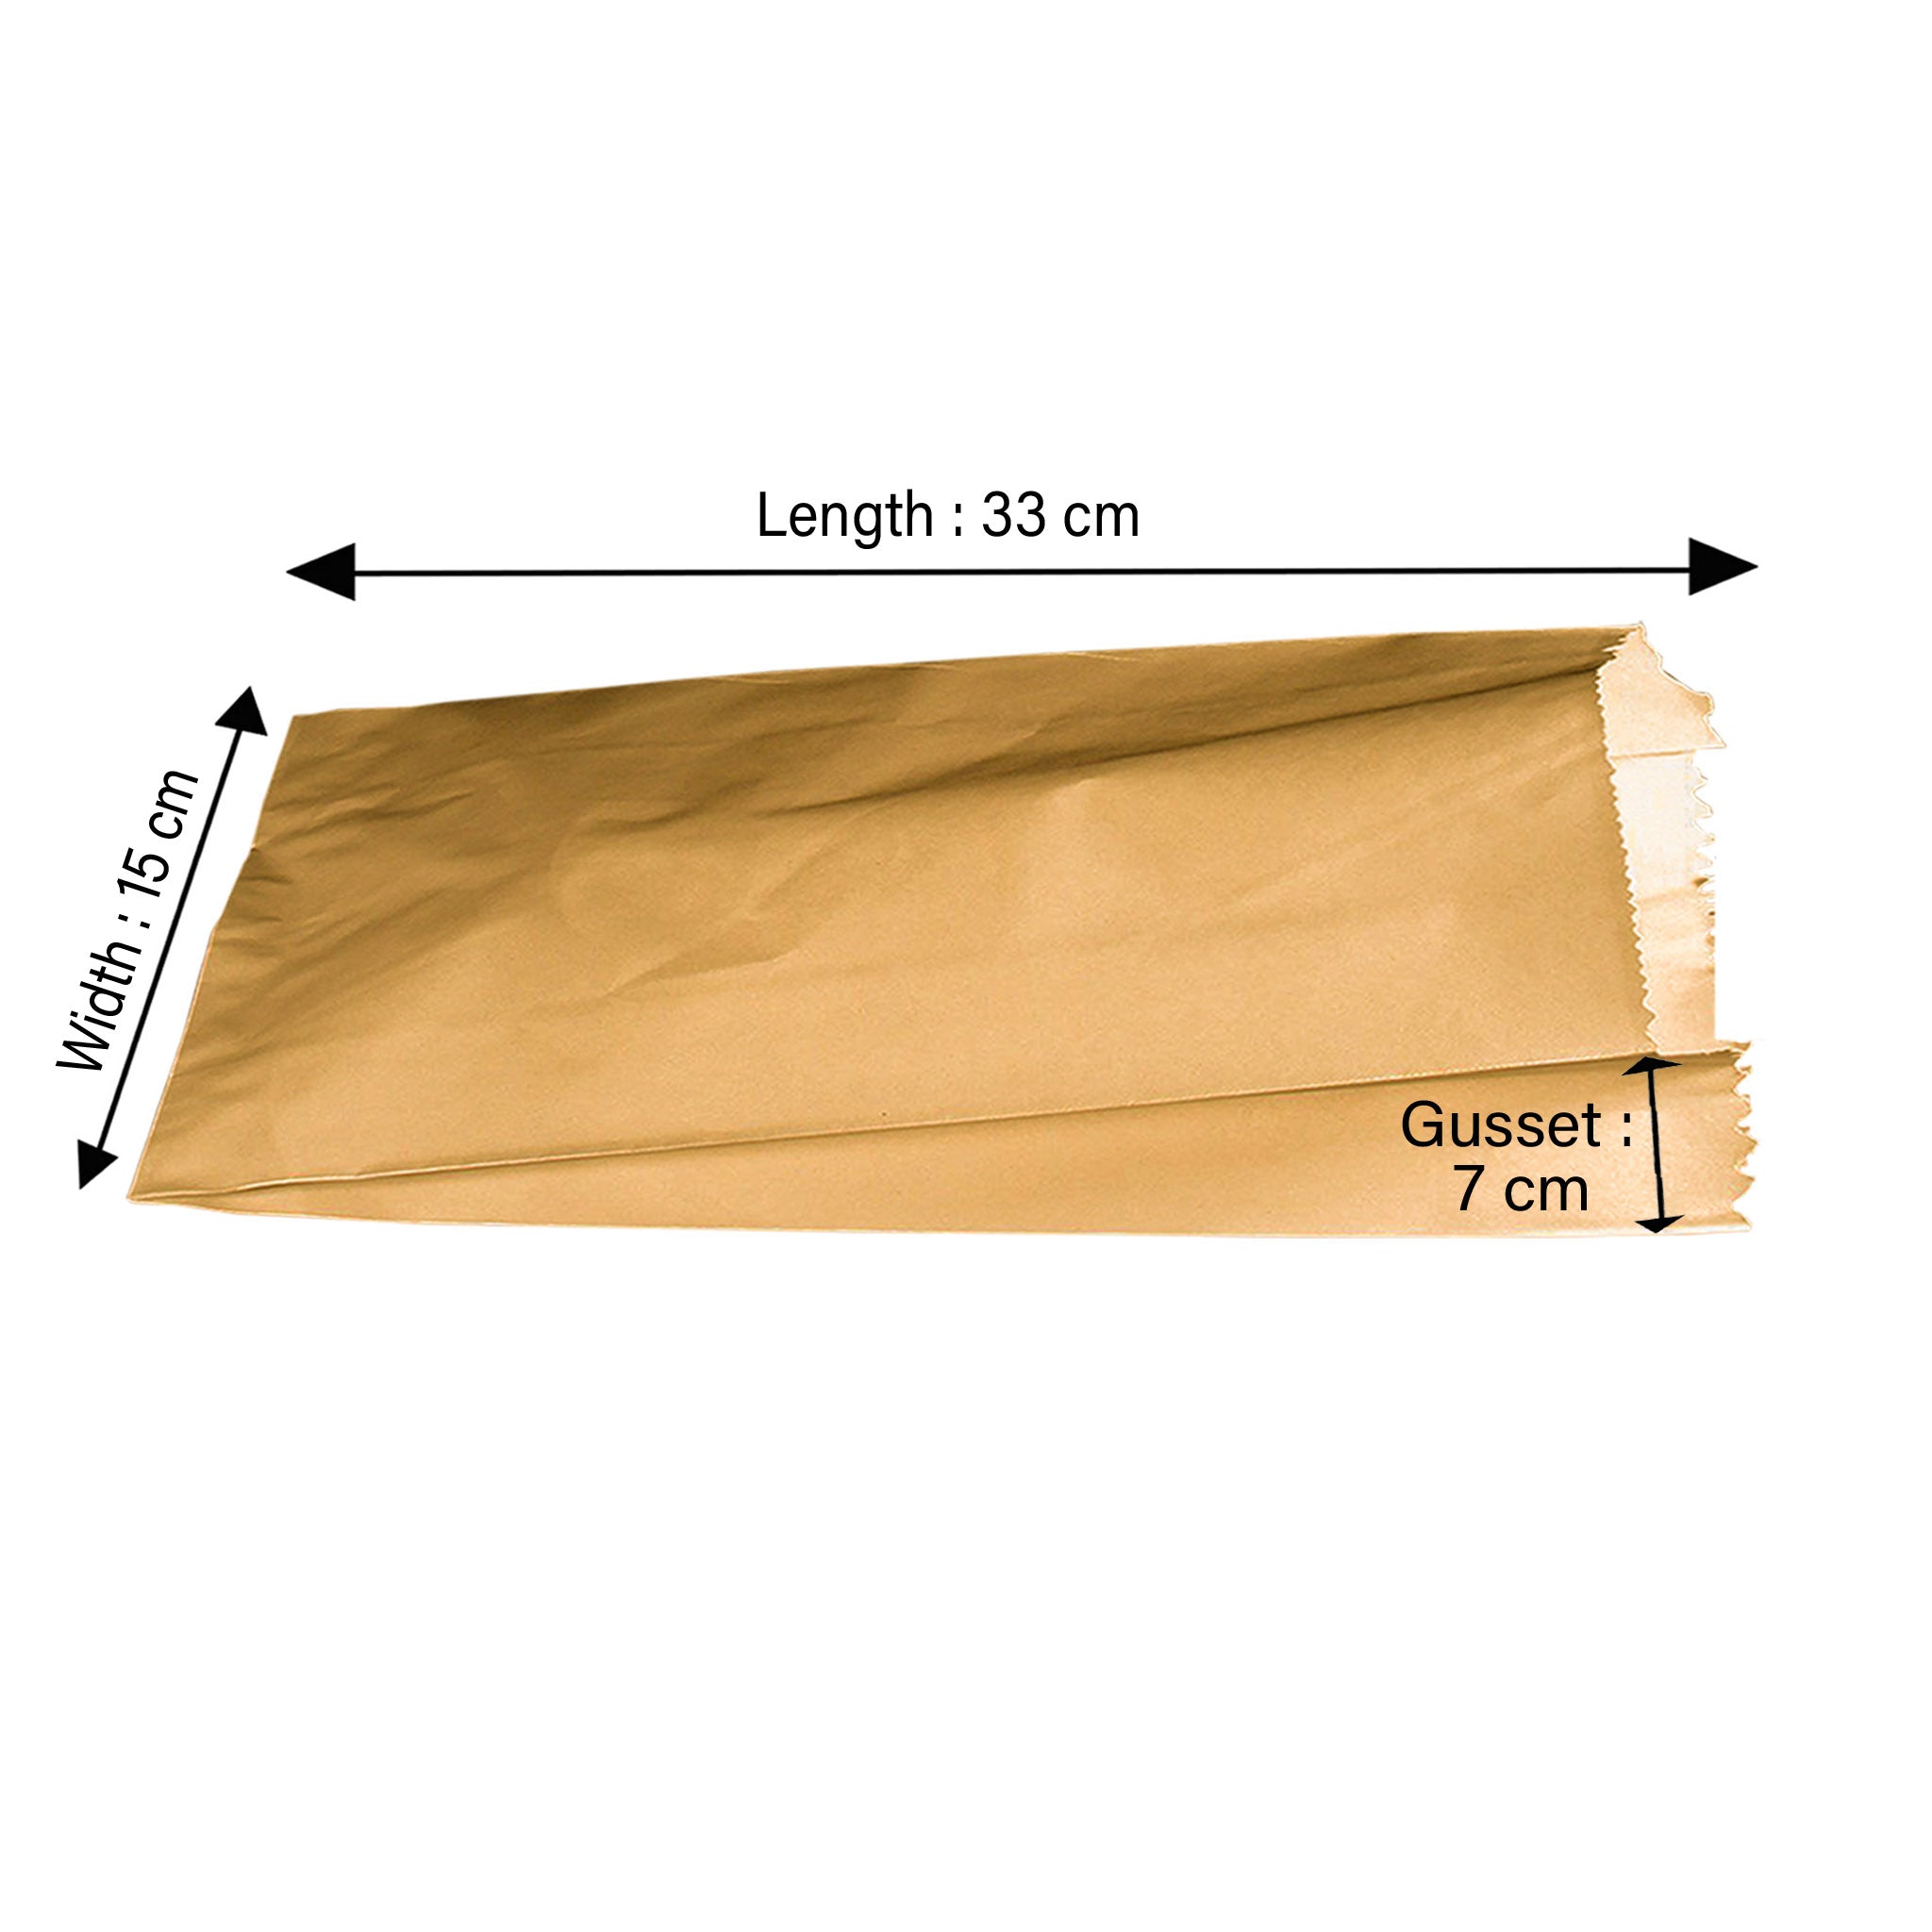 Flat Bottom Paper Bag 15 x 7 x 33 cm - Hotpack Global